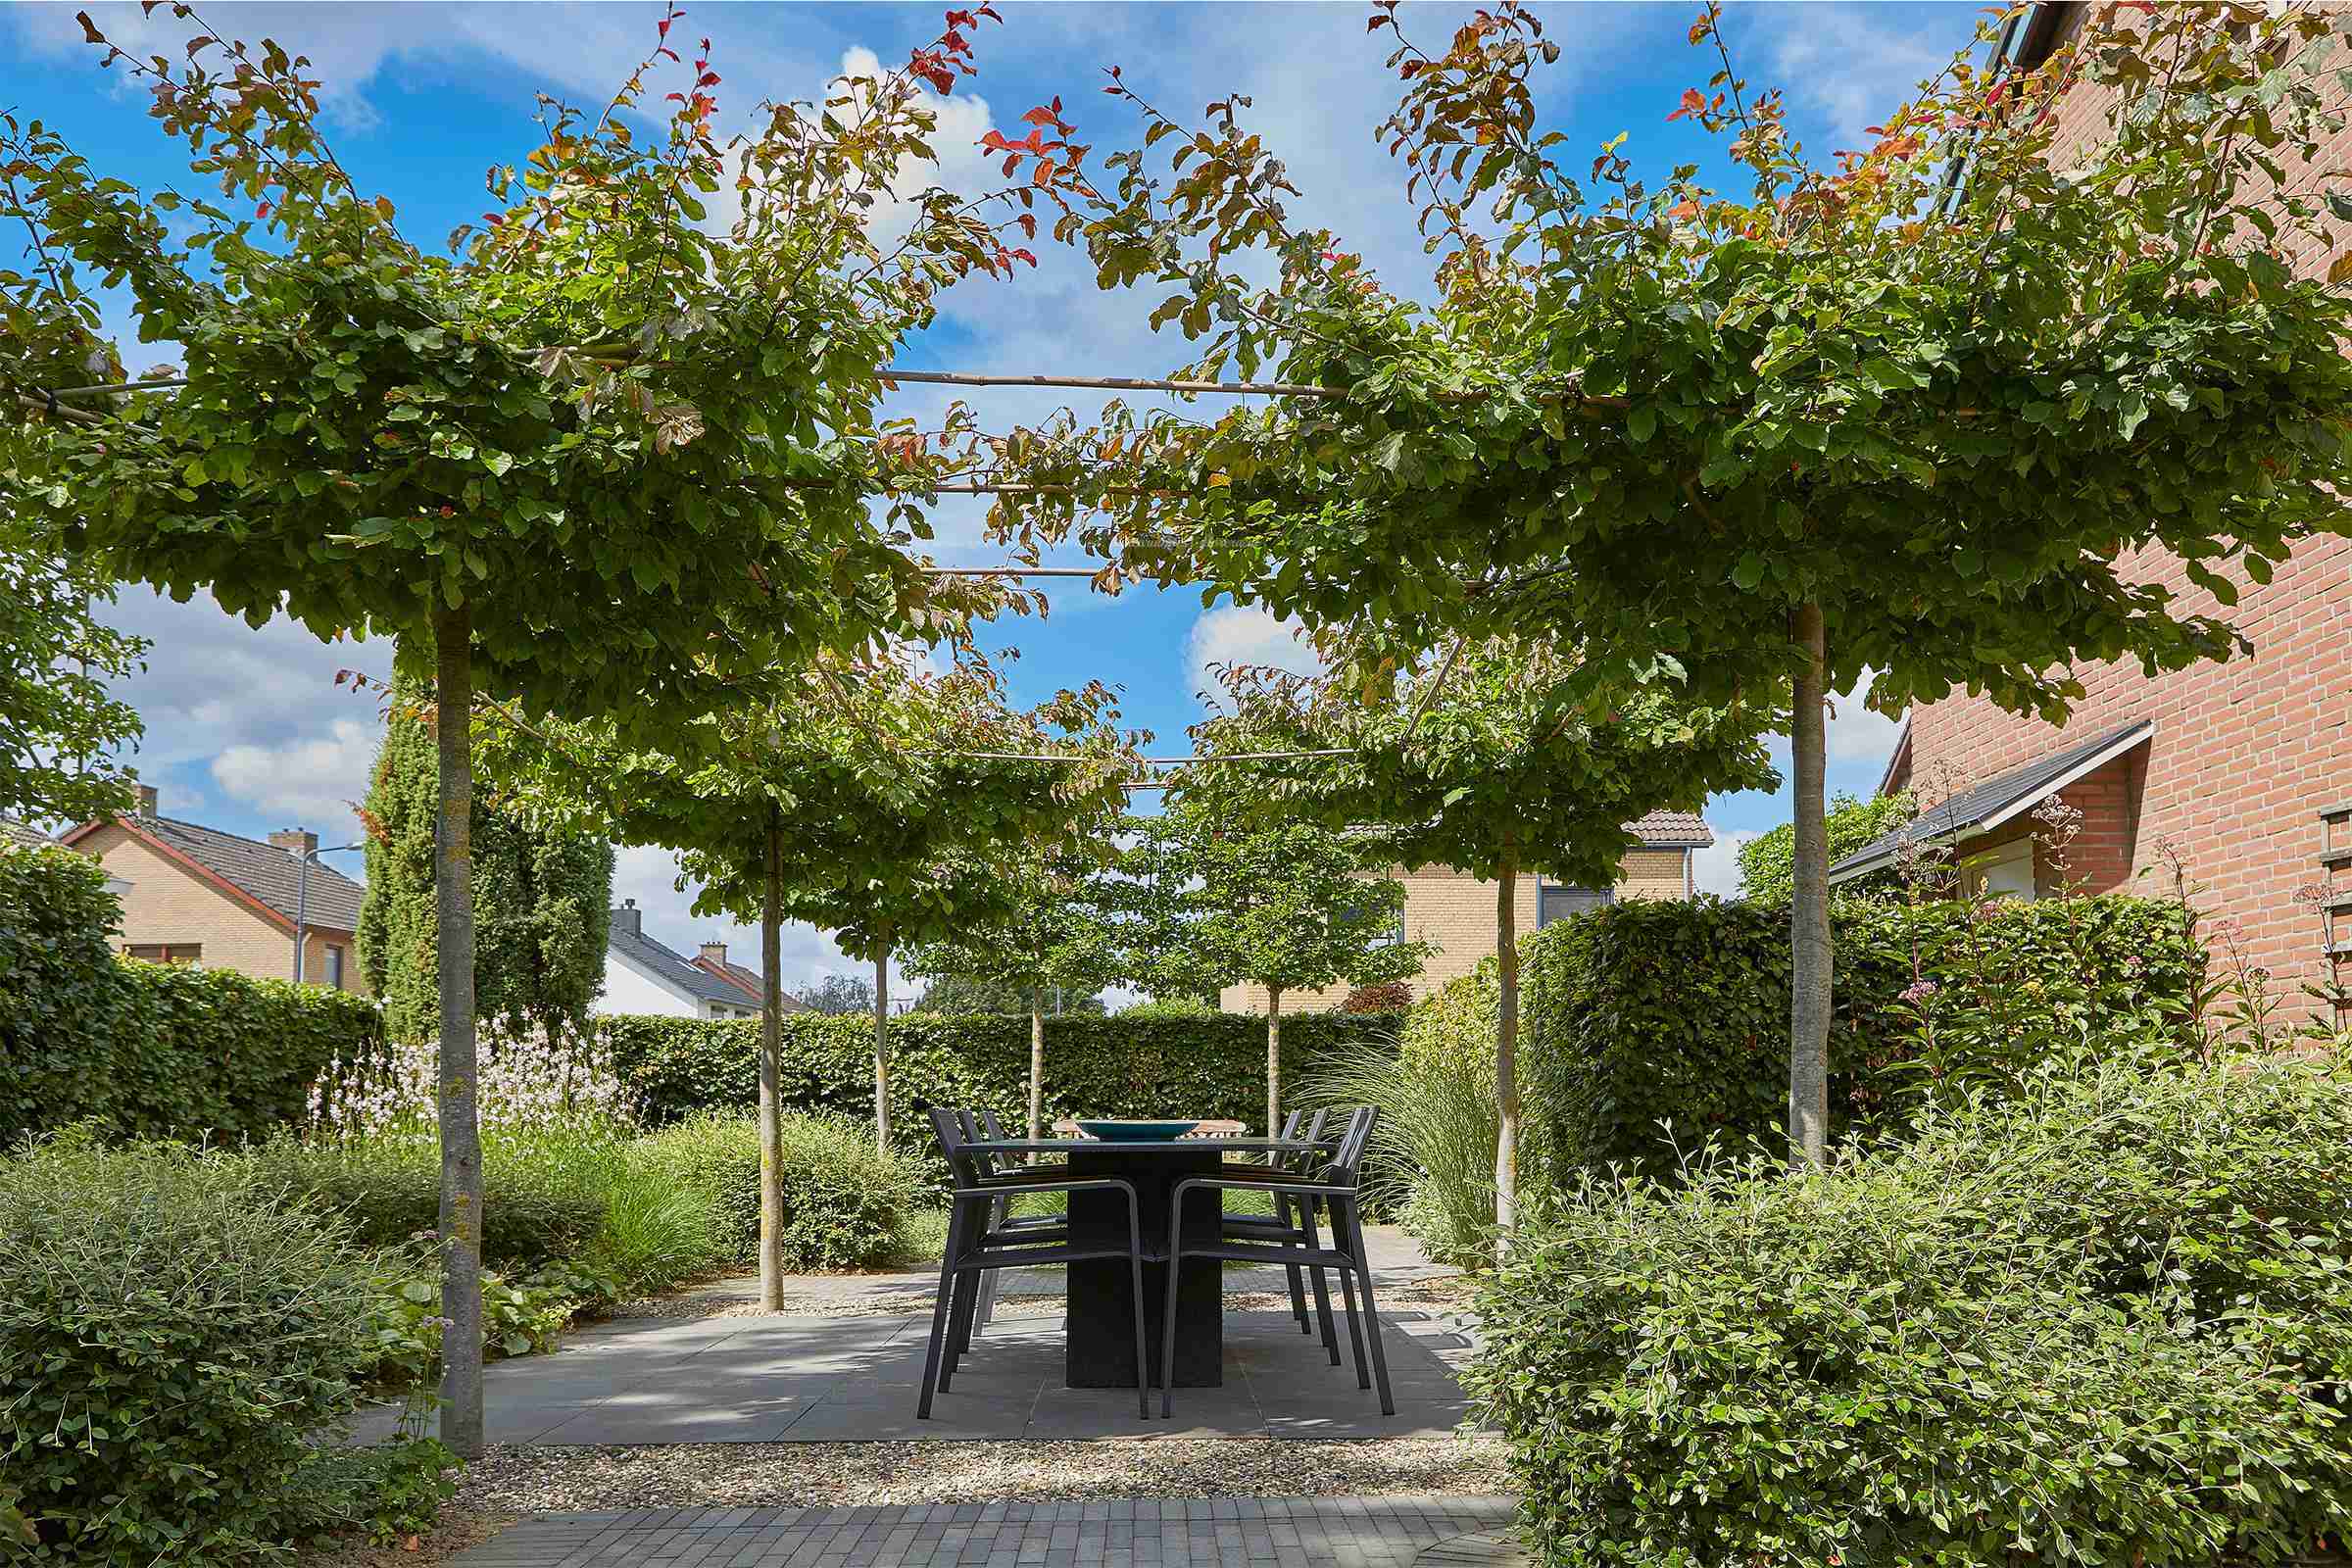 dakbomen terras in landelijke tuin Sittard na tuinontwerp-florera.nl